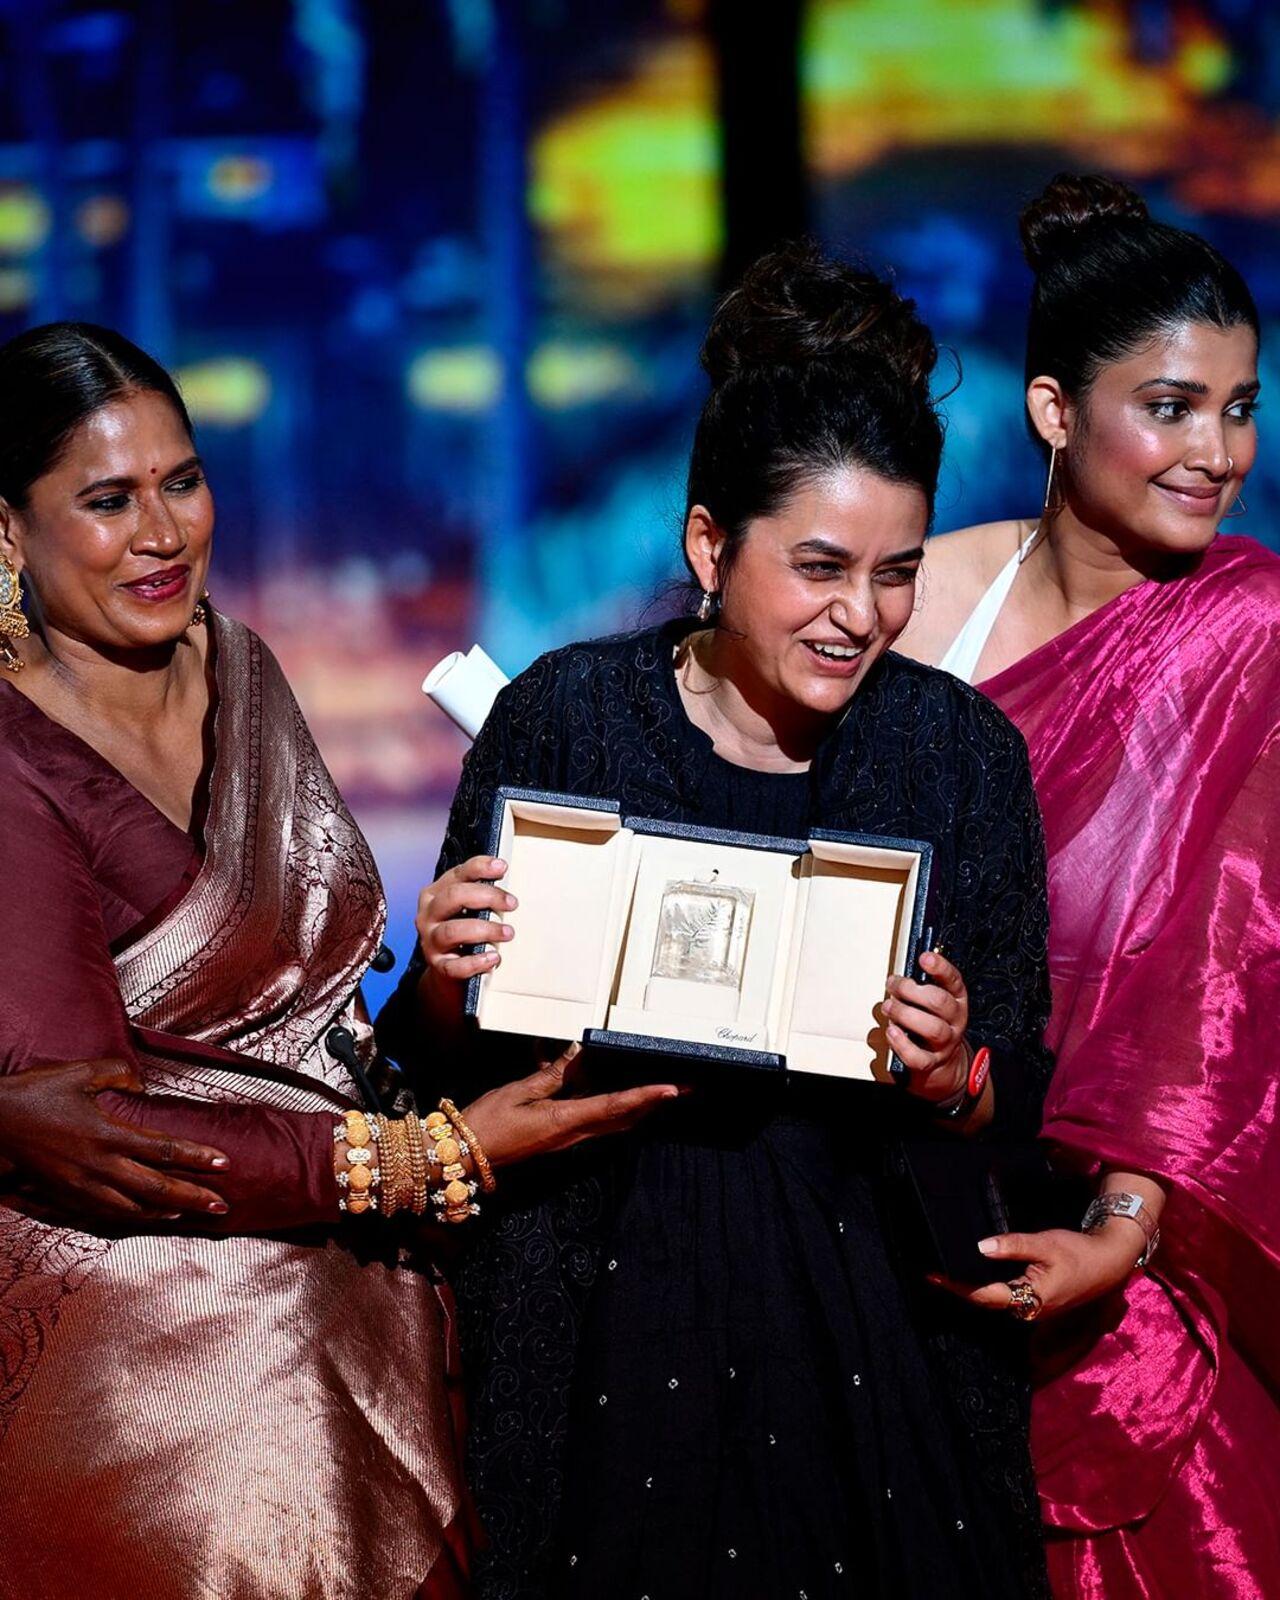 To receive the award, Payal Kapadia also took the leading ladies of her film on stage- Kani Kusruti, Divya Prabha and Chayya Kadam